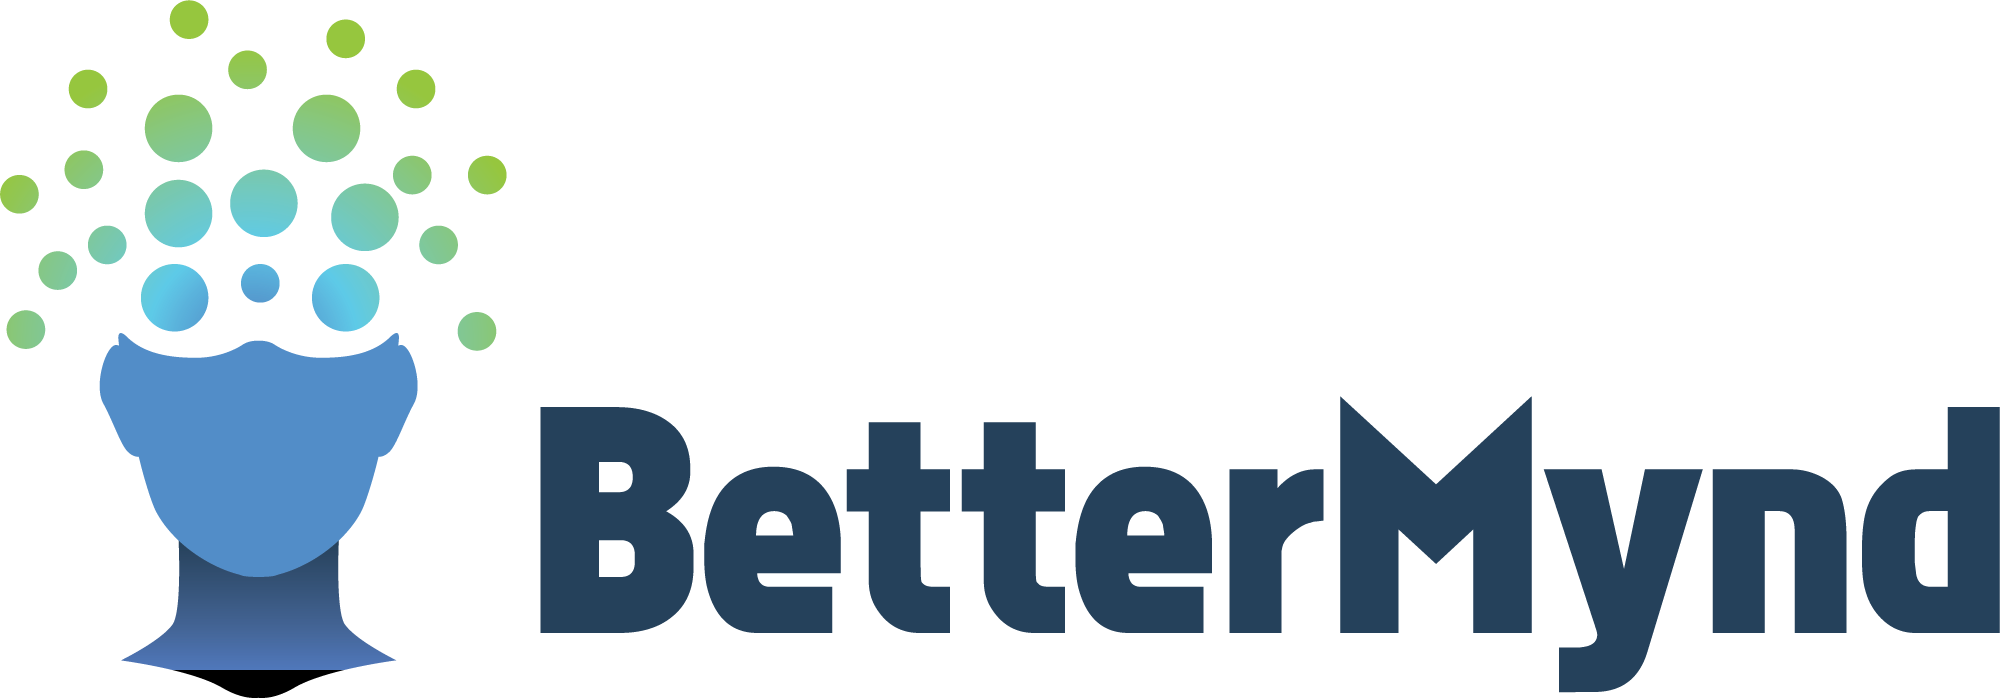 bettermynd-logo-horizontal.png